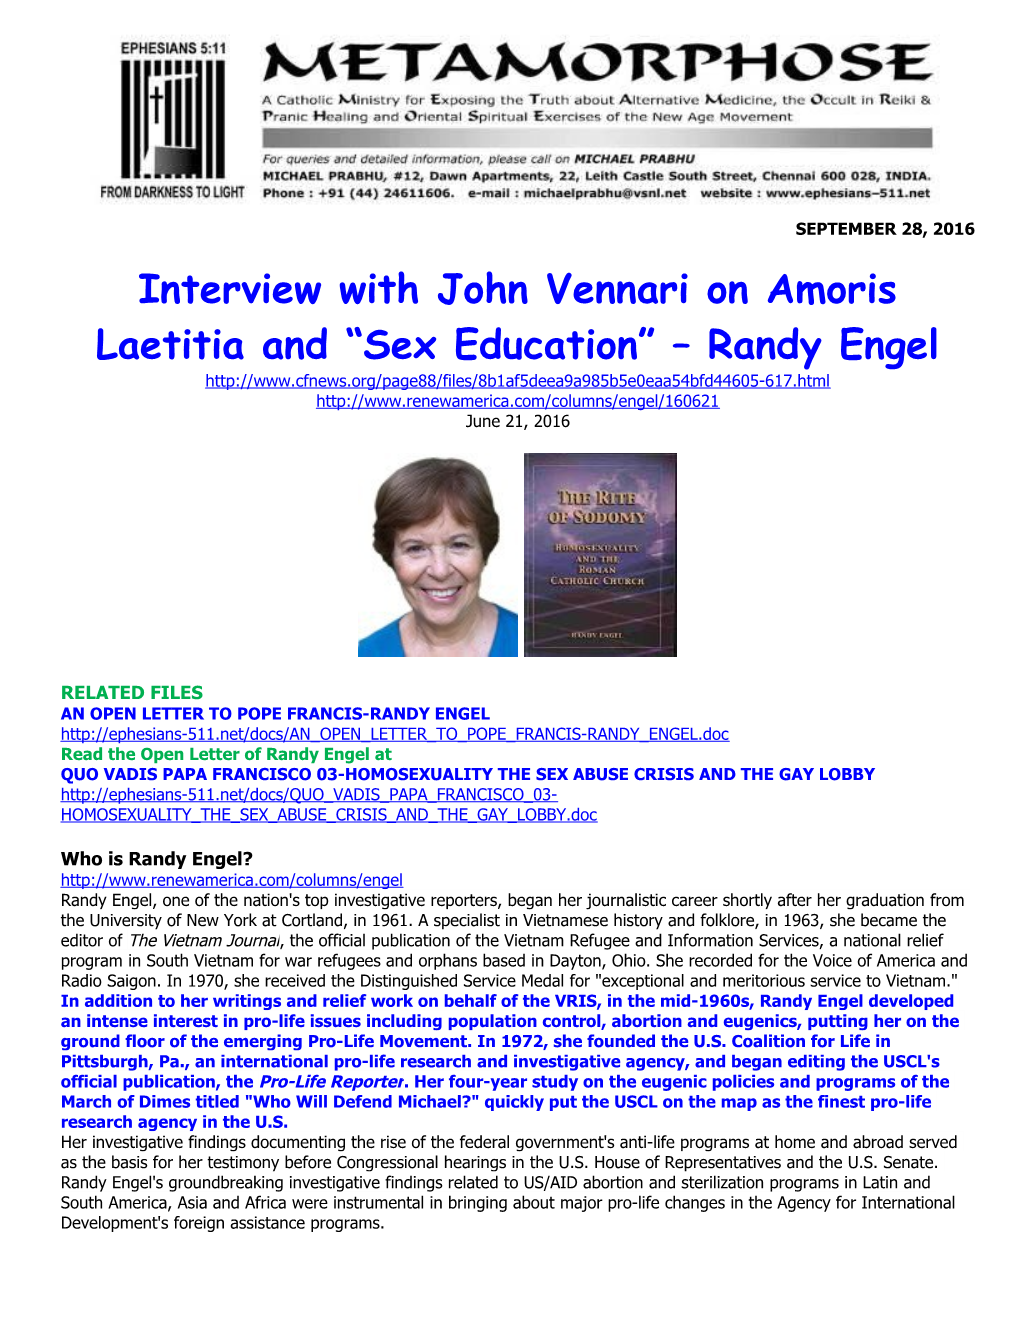 Interview with John Vennari on Amoris Laetitia and Sex Education Randy Engel